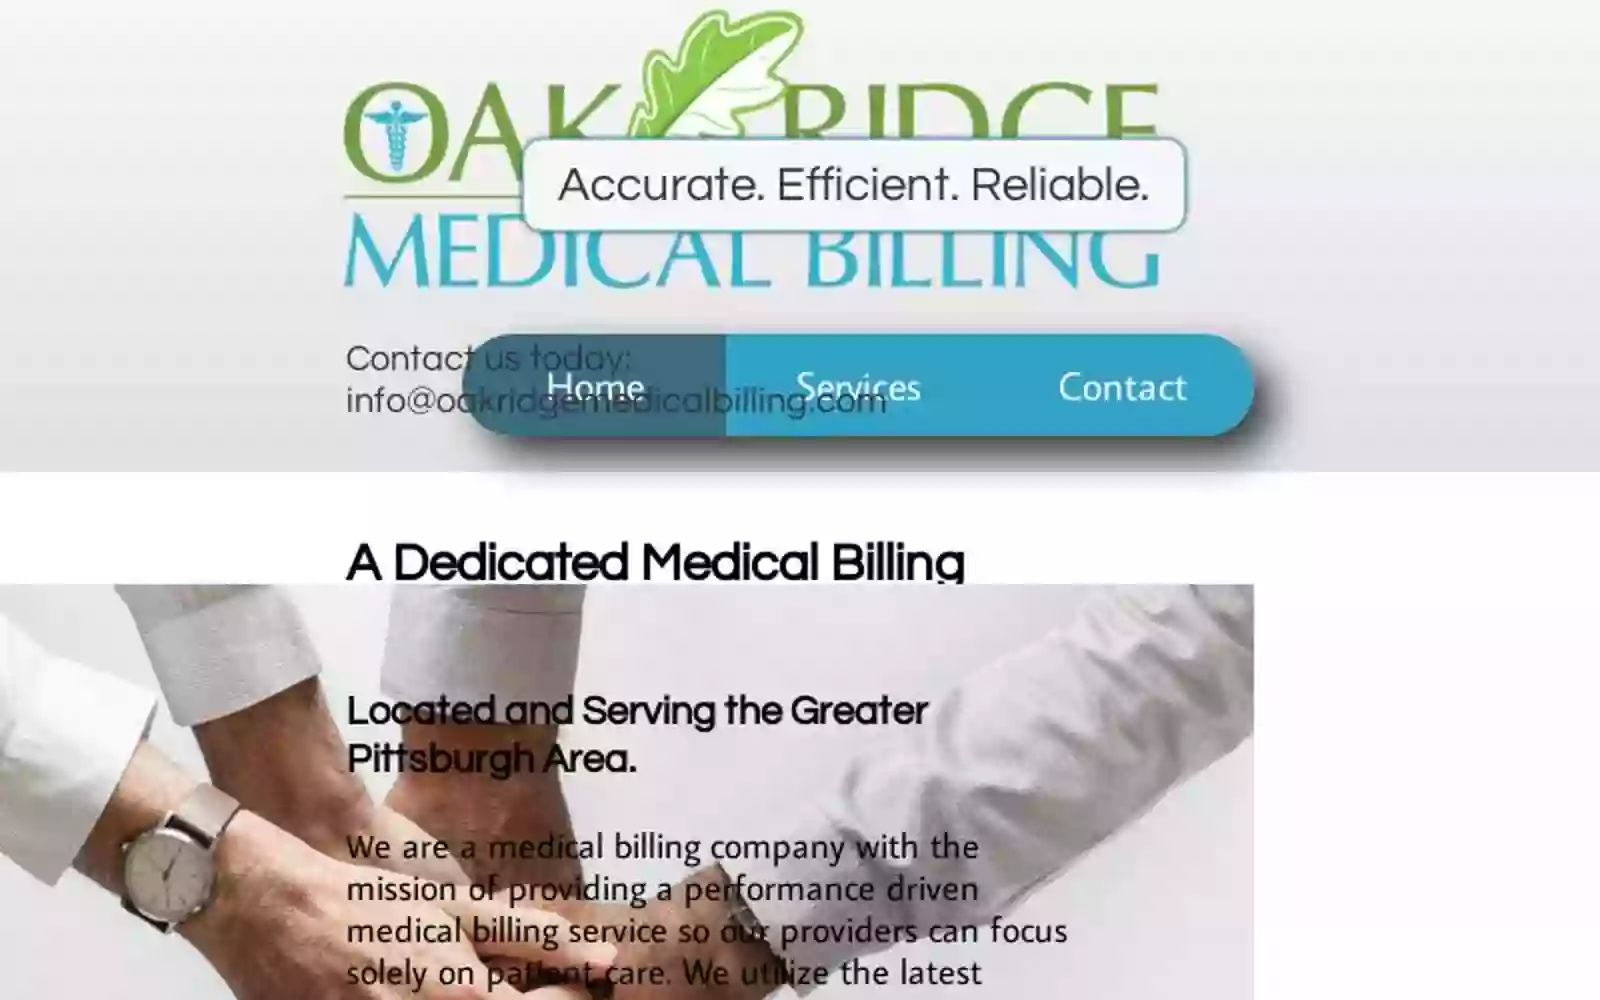 Oak Ridge Medical Billing, LLC